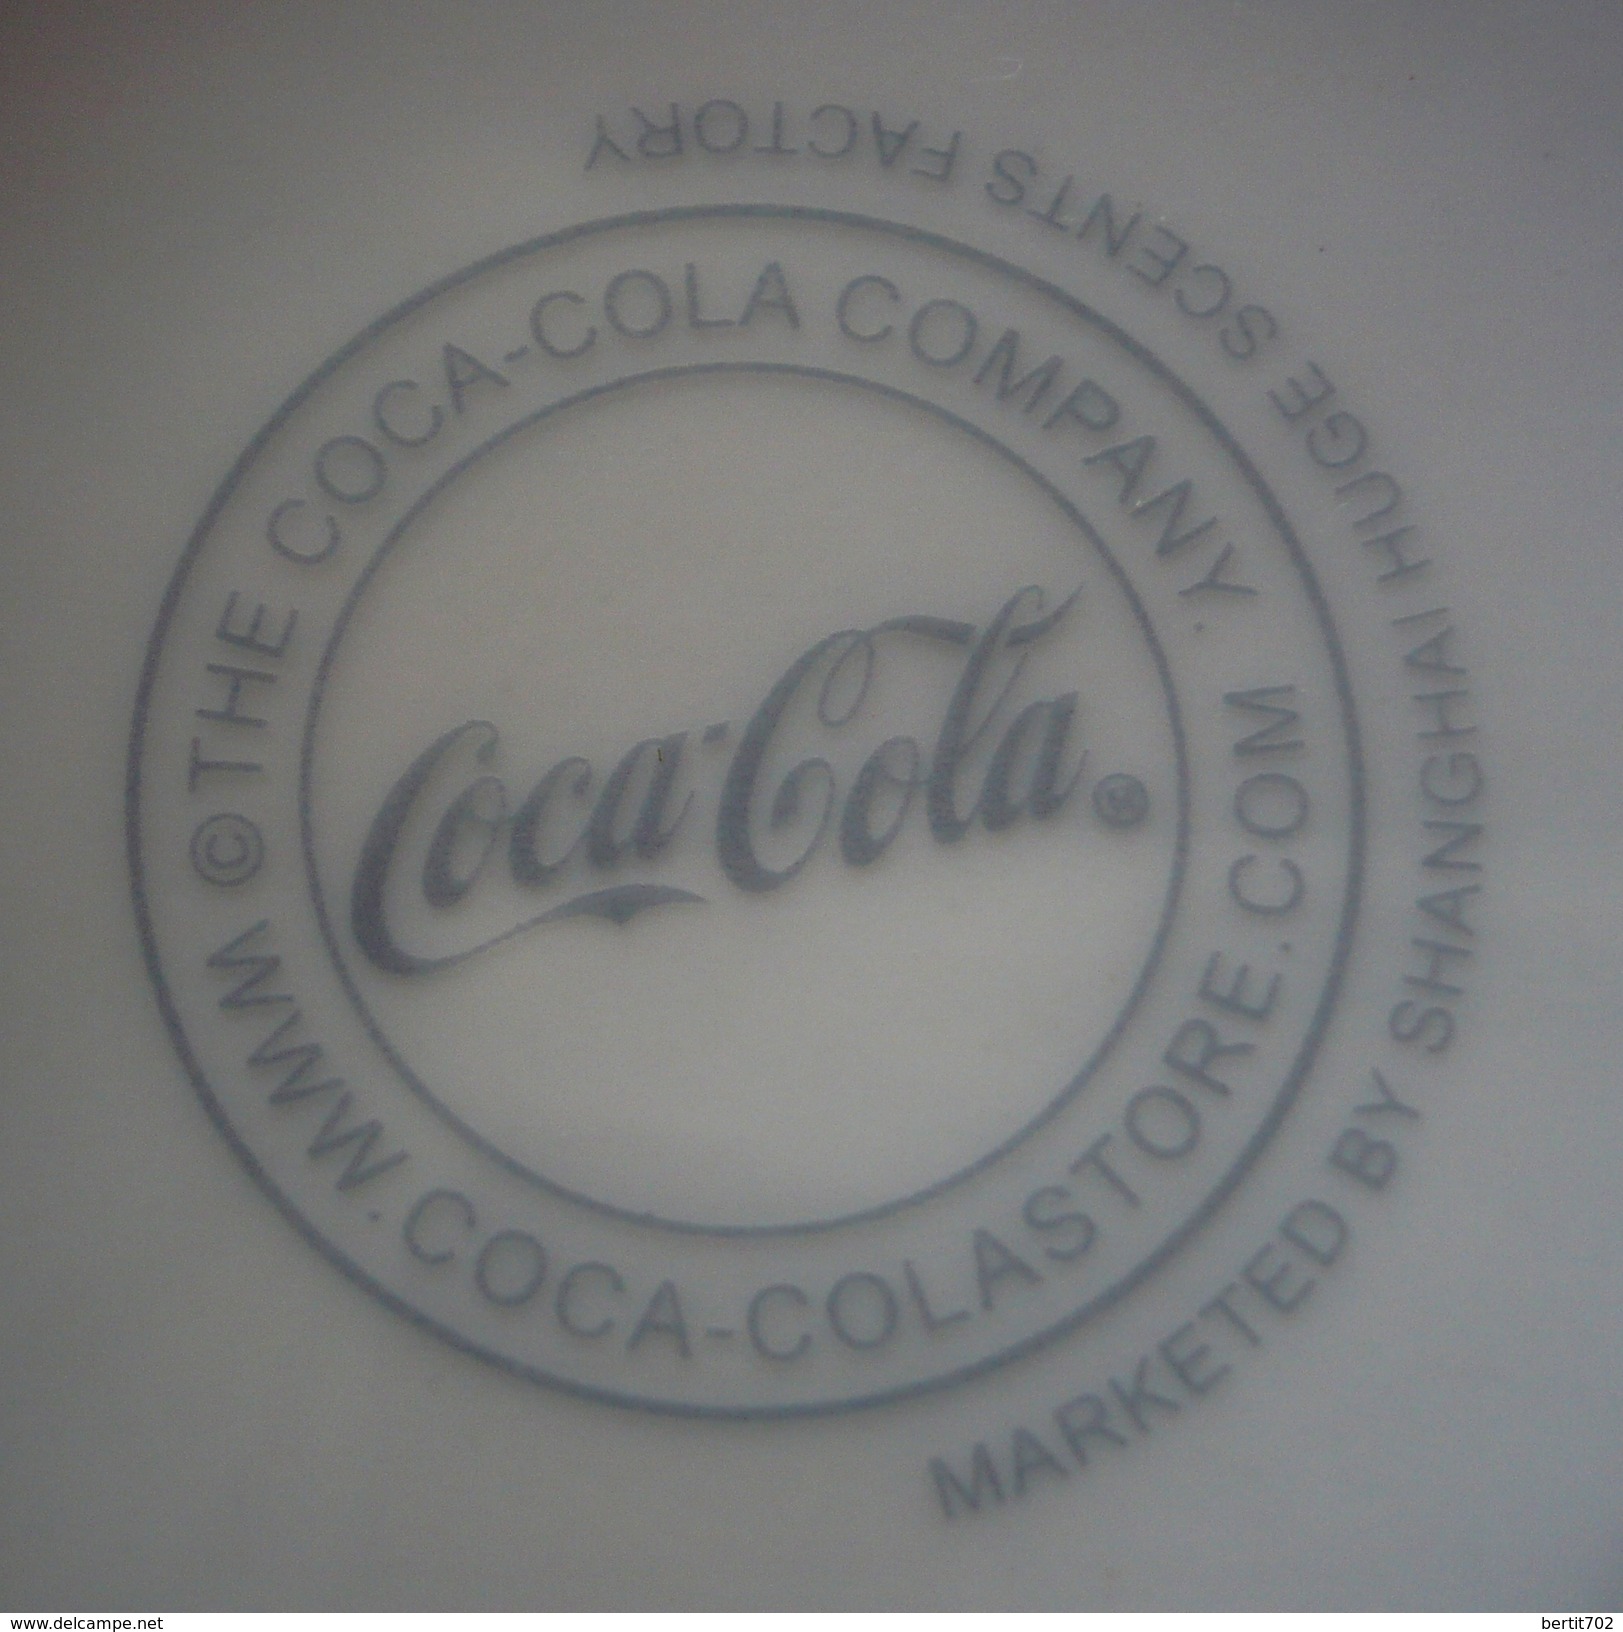 LOT DE 4 SUPERBES MUG - COCA-COLA - Drink - Coke - The Pause That Refreshes - Refreshing - Tazas & Vasos